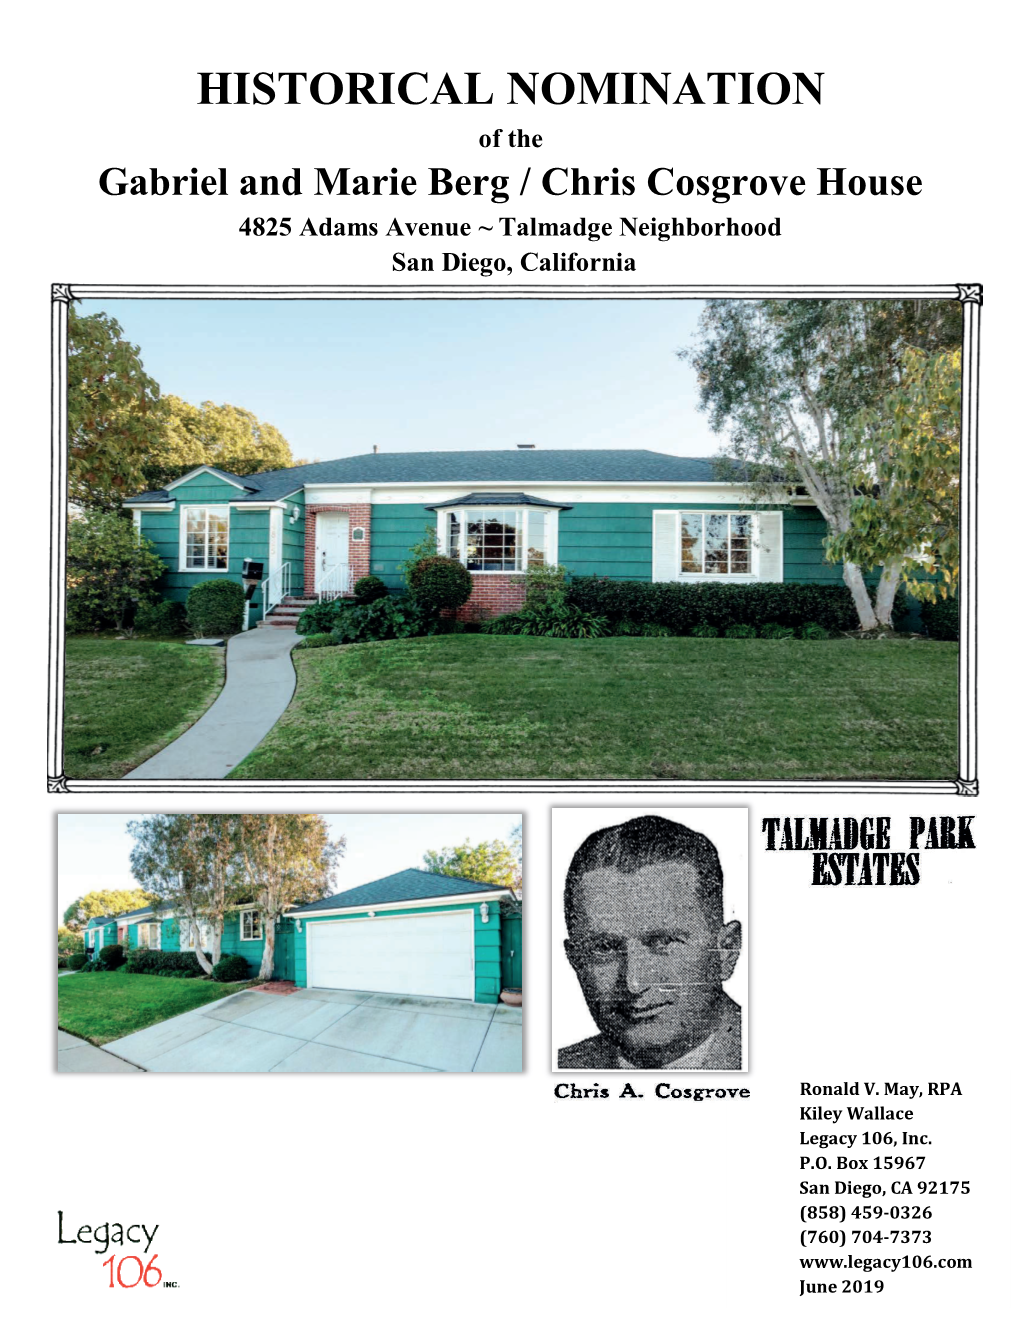 HISTORICAL NOMINATION of the Gabriel and Marie Berg / Chris Cosgrove House 4825 Adams Avenue ~ Talmadge Neighborhood San Diego, California